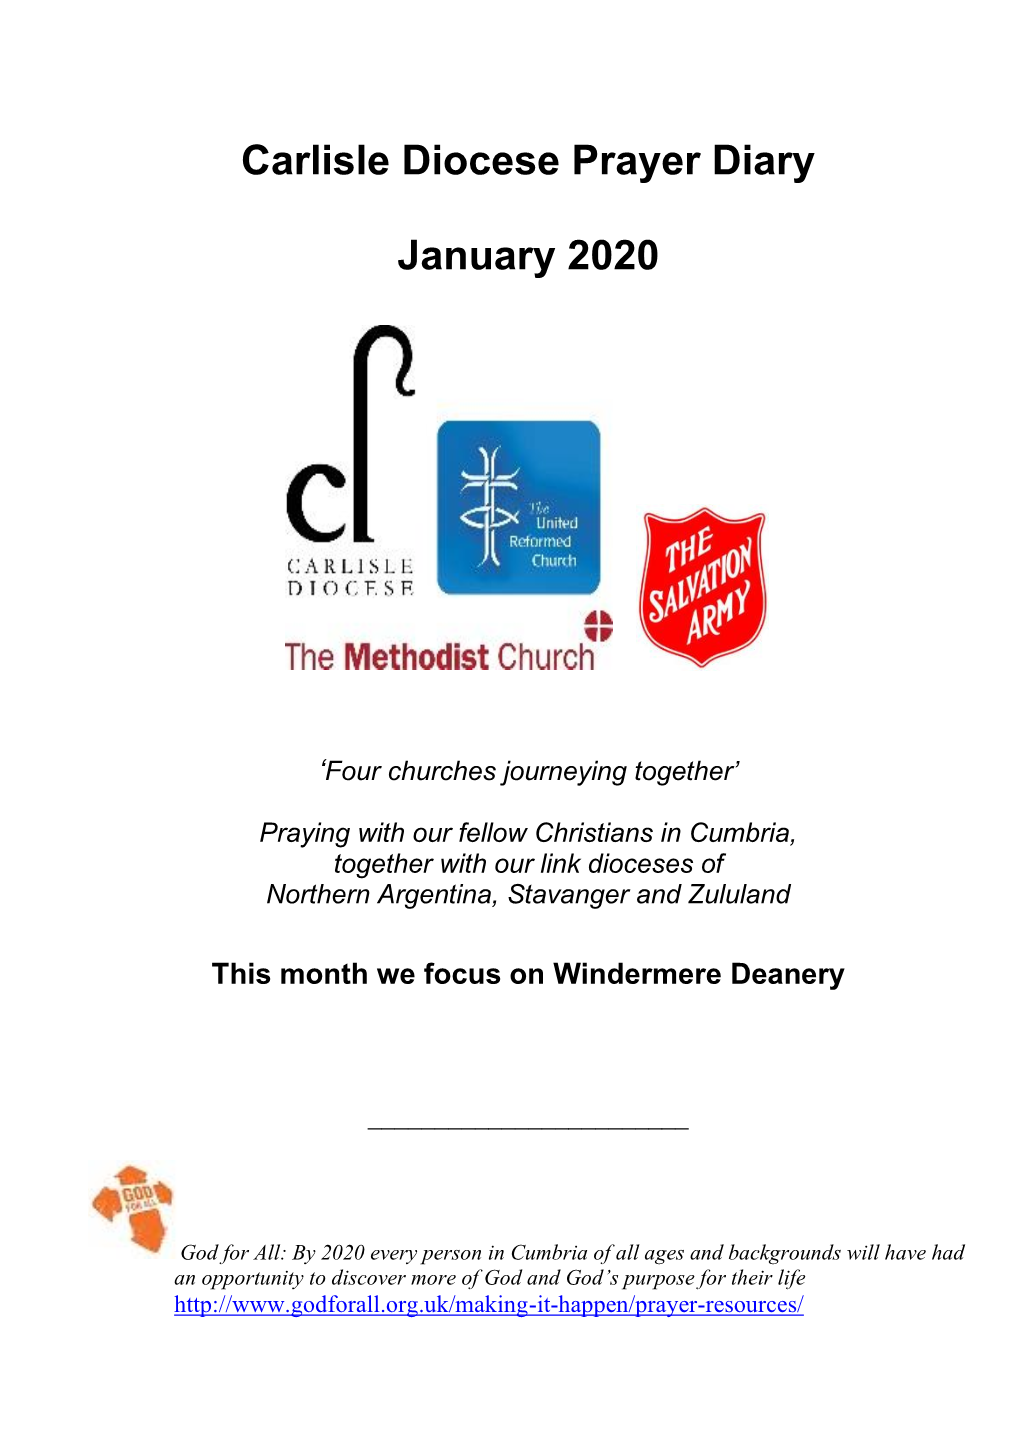 Carlisle Diocese Prayer Diary January 2020